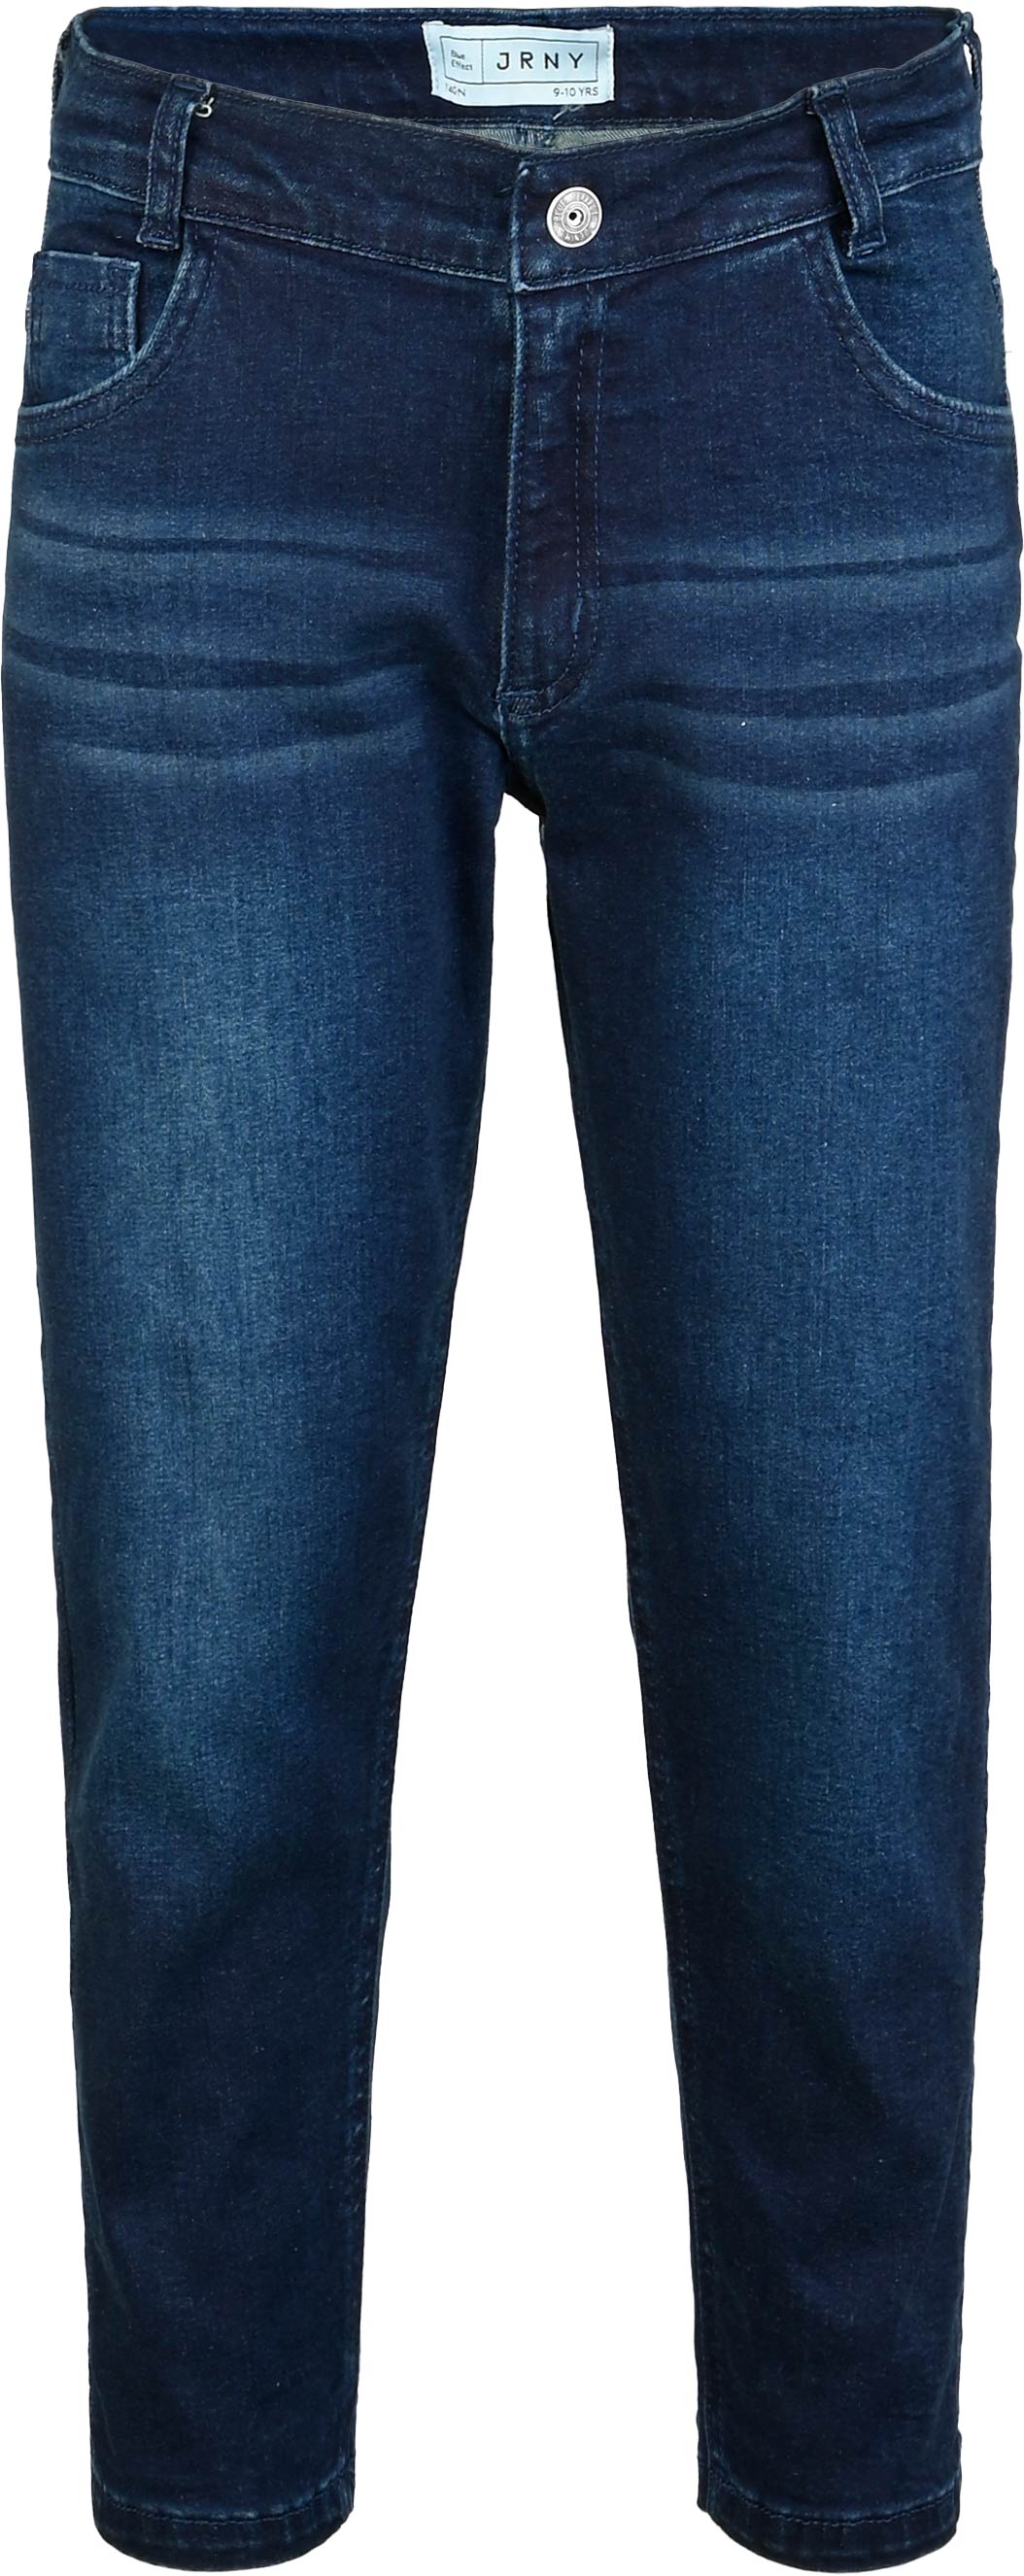 2901-JRNY Wide Leg Jeans Boys, verfügbar in Normal